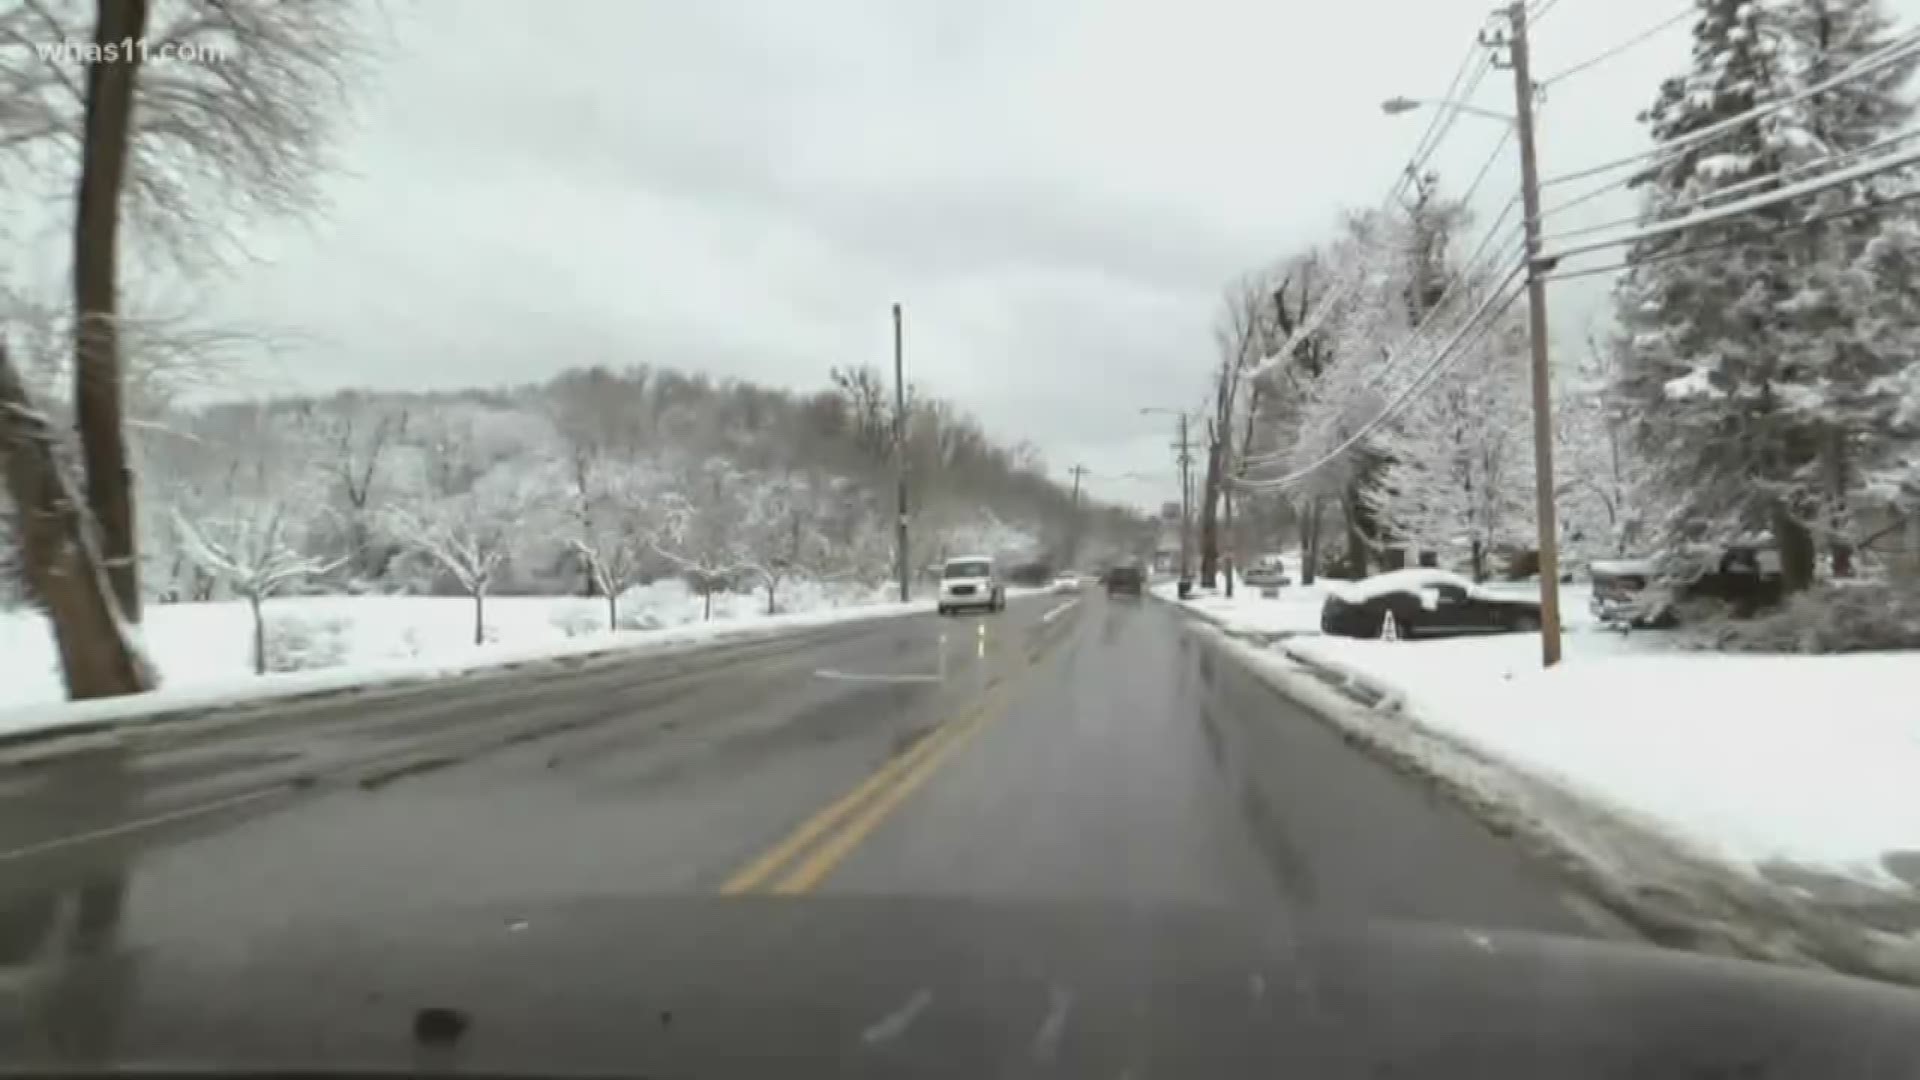 Road conditions across Kentuckiana